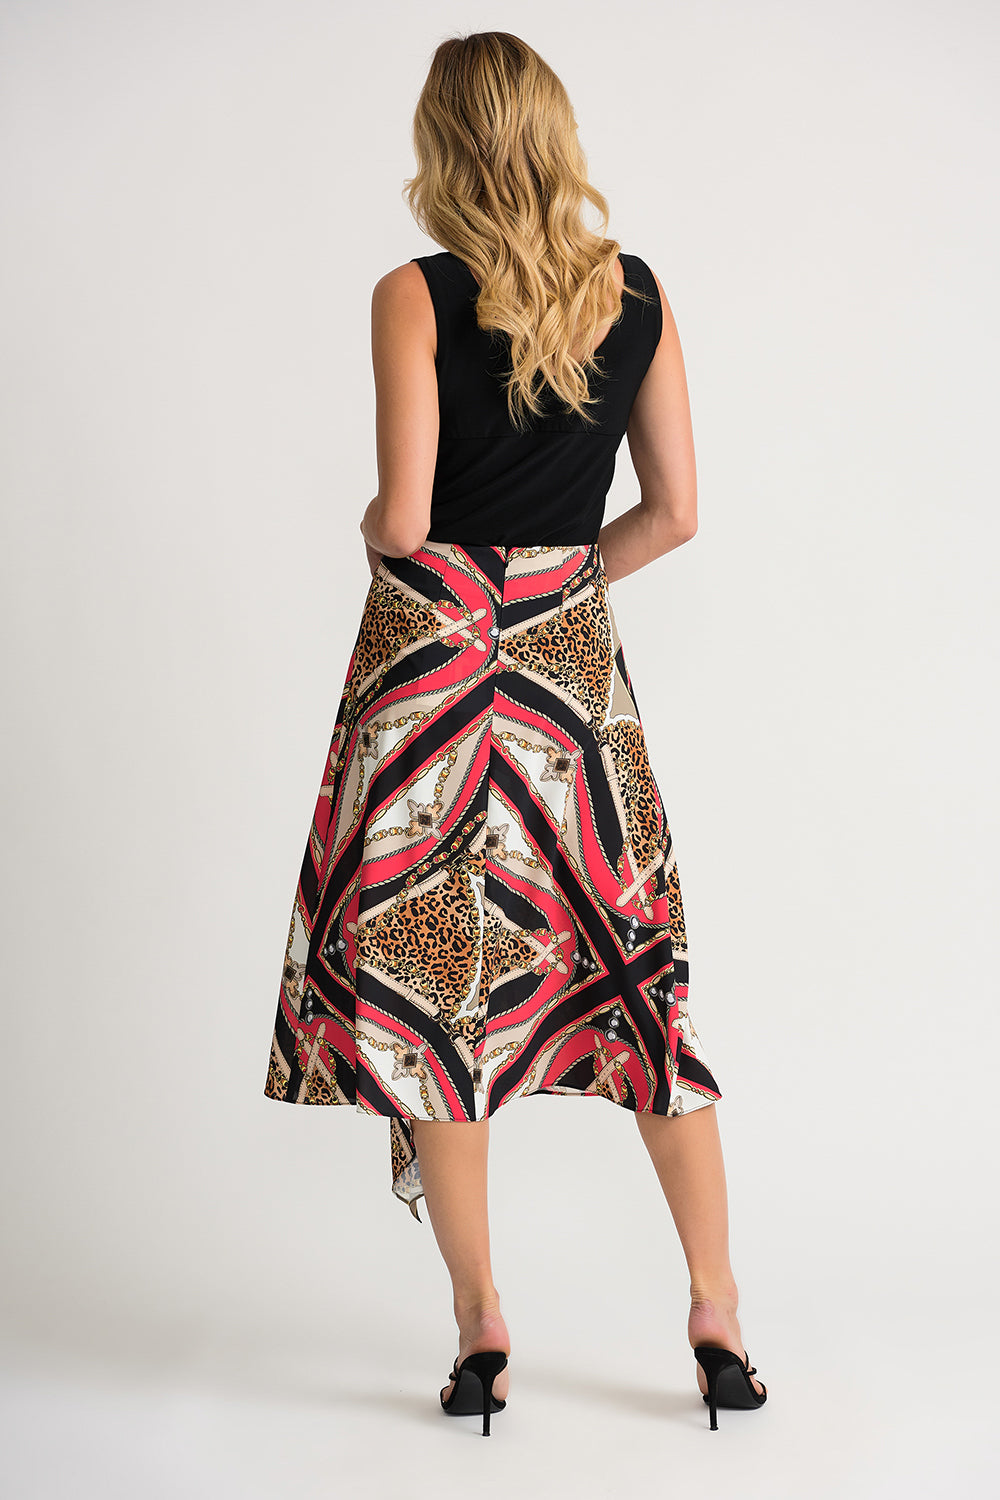 Joseph Ribkoff Papaya-Multi Skirt Style 202257